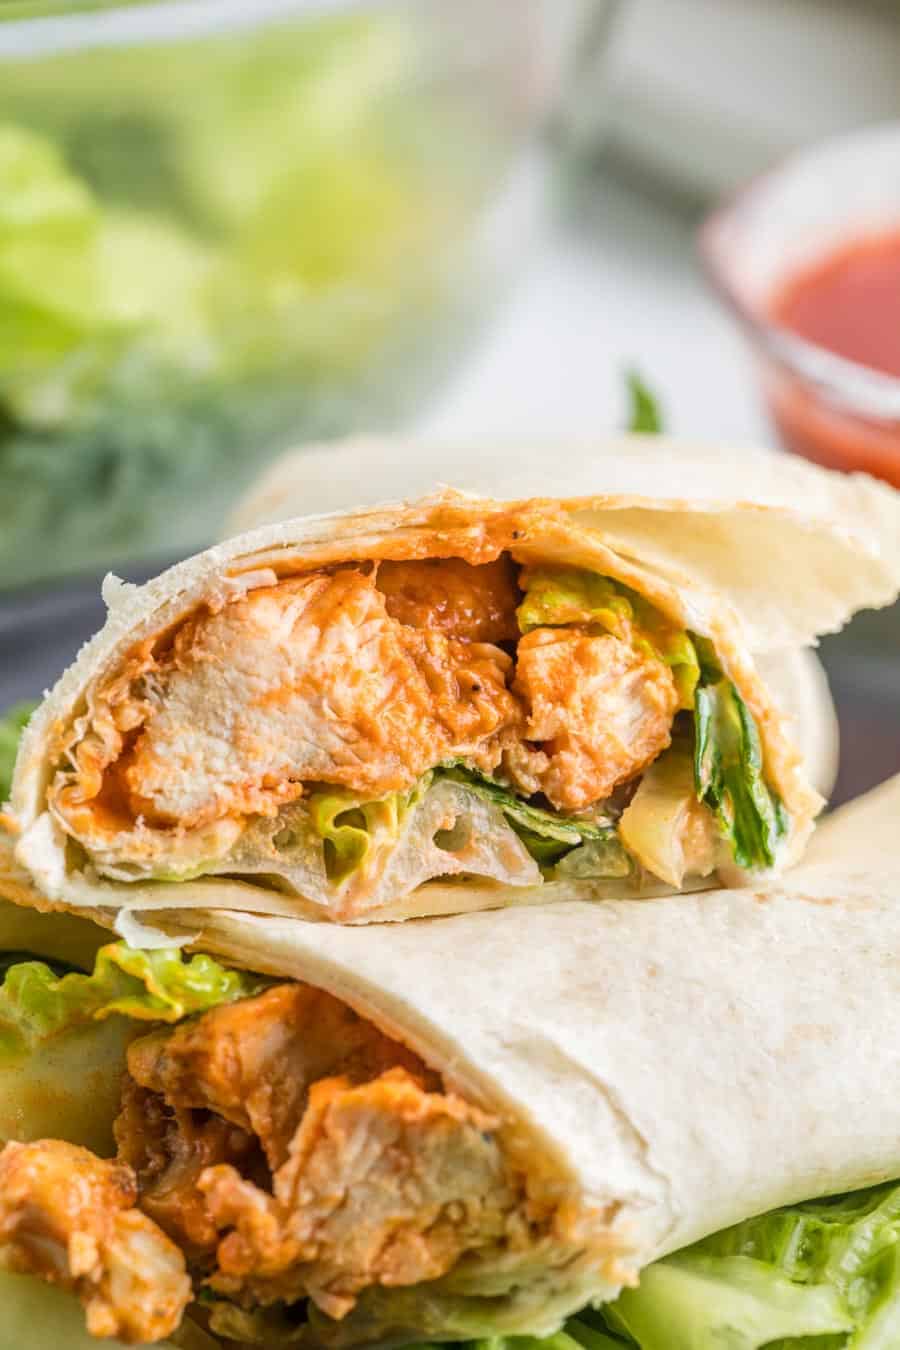 Chicken Wrap Recipe – How To Make Chicken Wrap - Licious